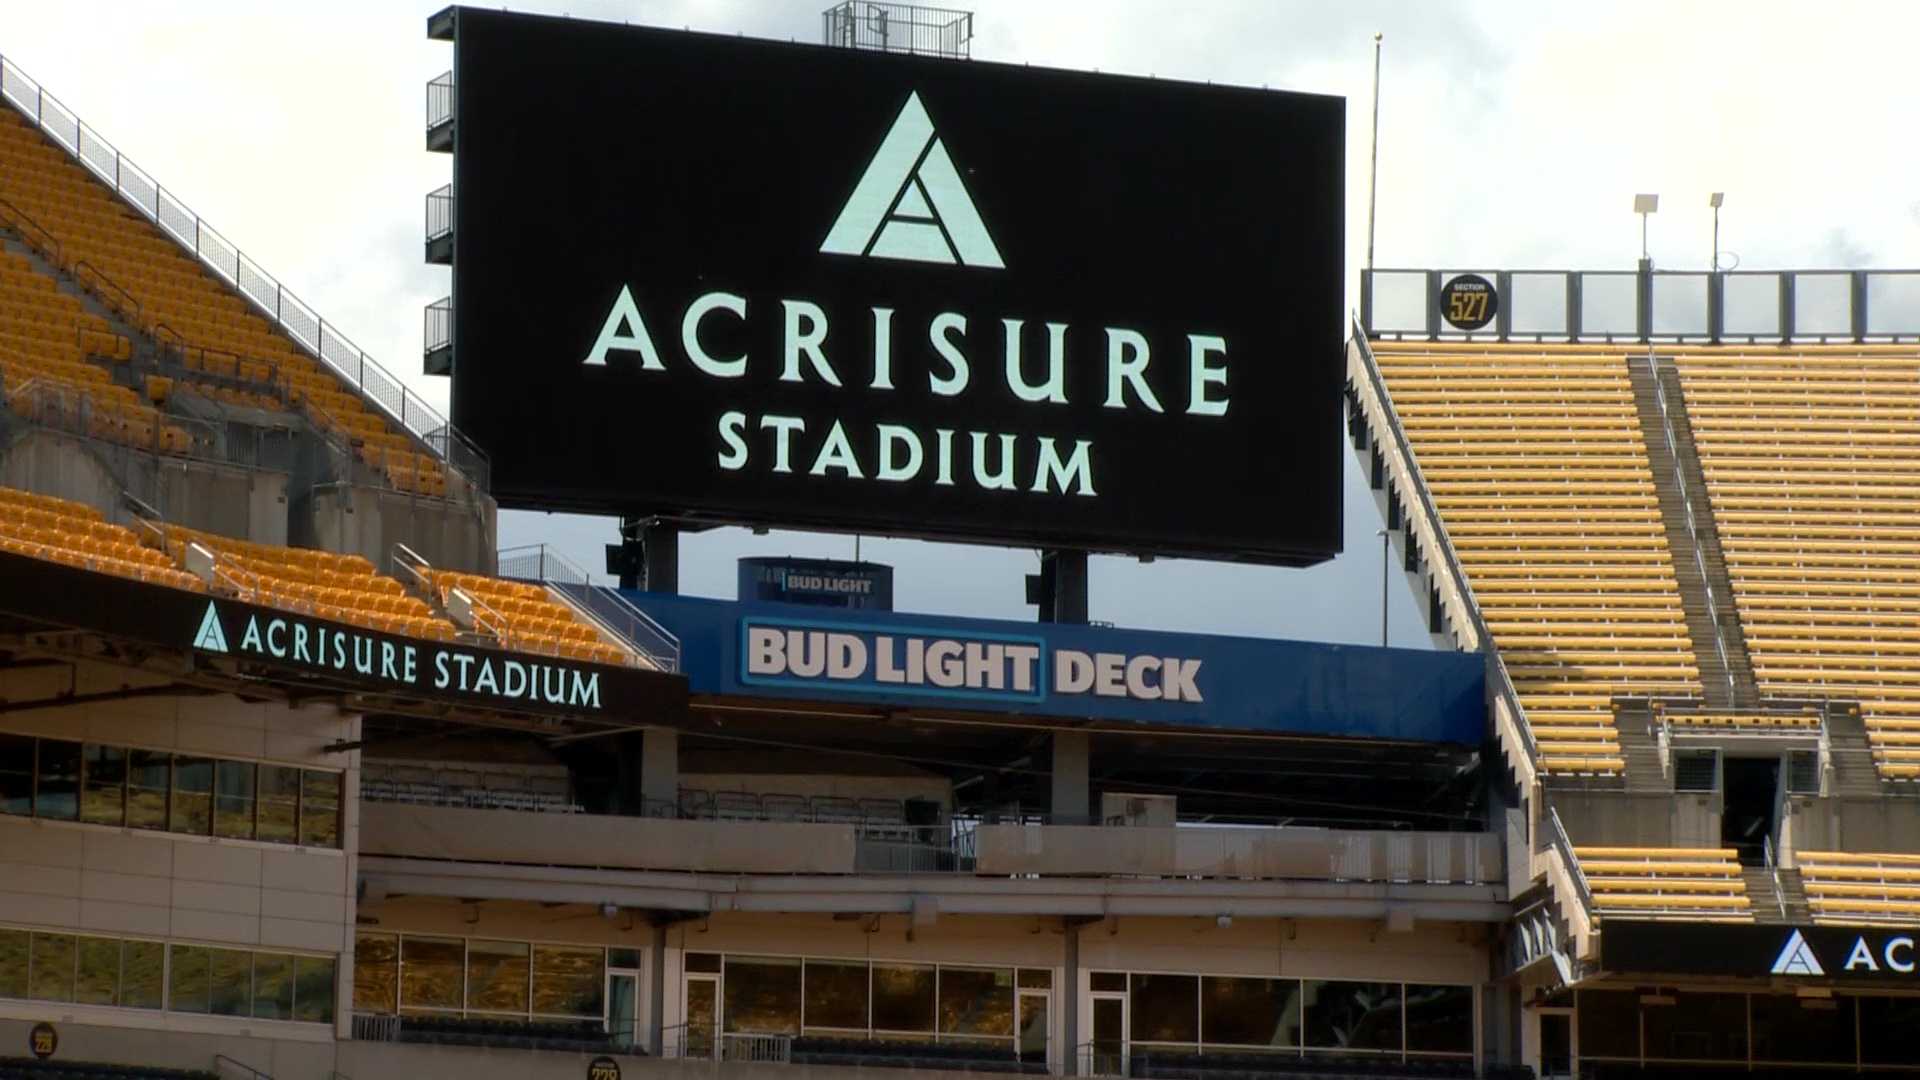 Heinz Field new name: Acrisure Stadium, home of the Steelers